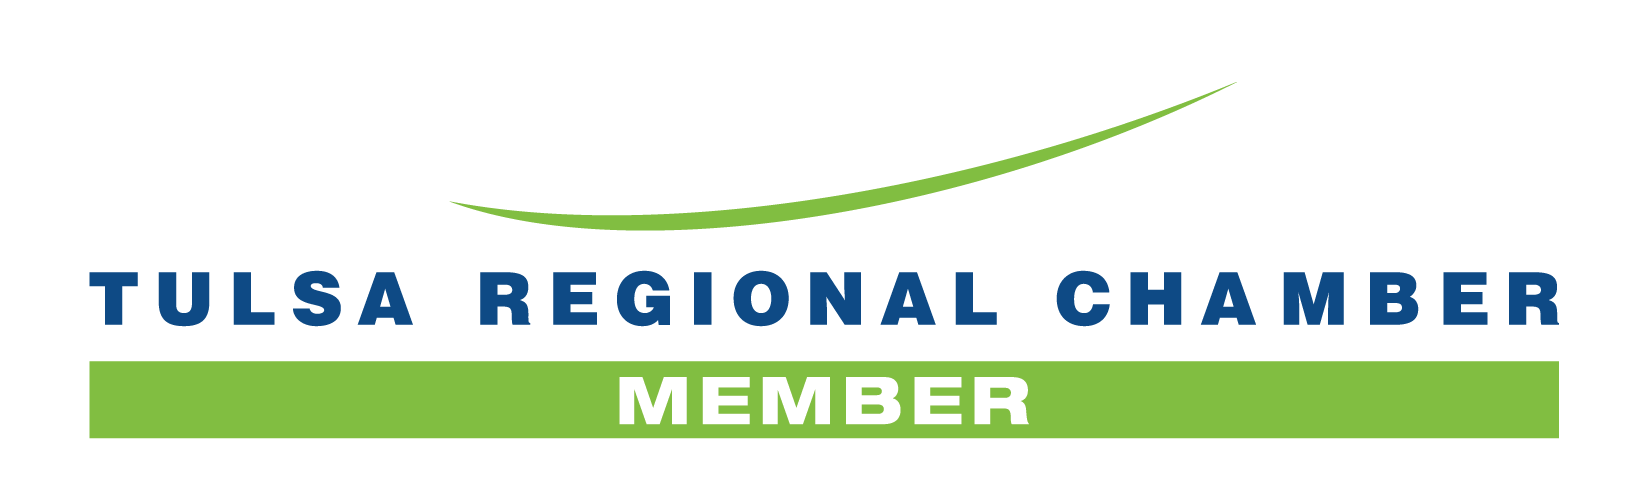 Tulsa regional chamber logo